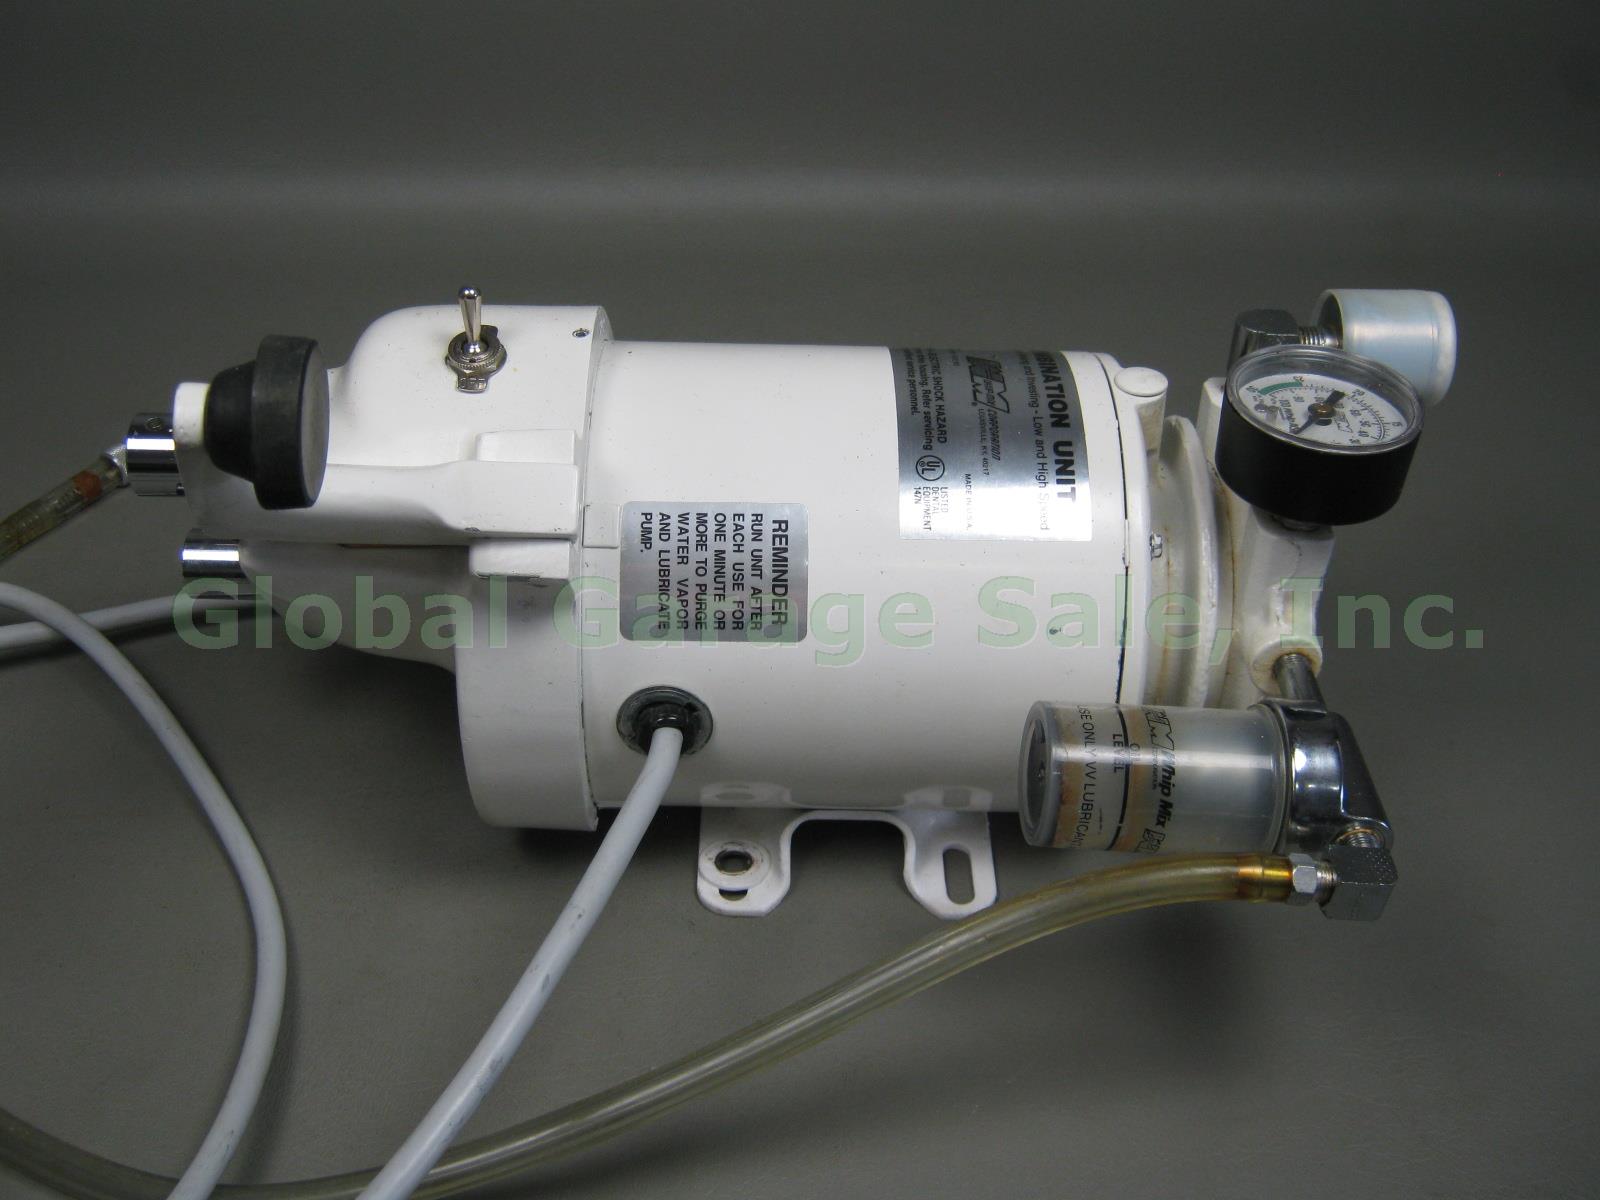 Whip Mix Combination Unit Dental Lab Vacuum Mixer D W/ GE 1/4HP 115/230V Motor 5